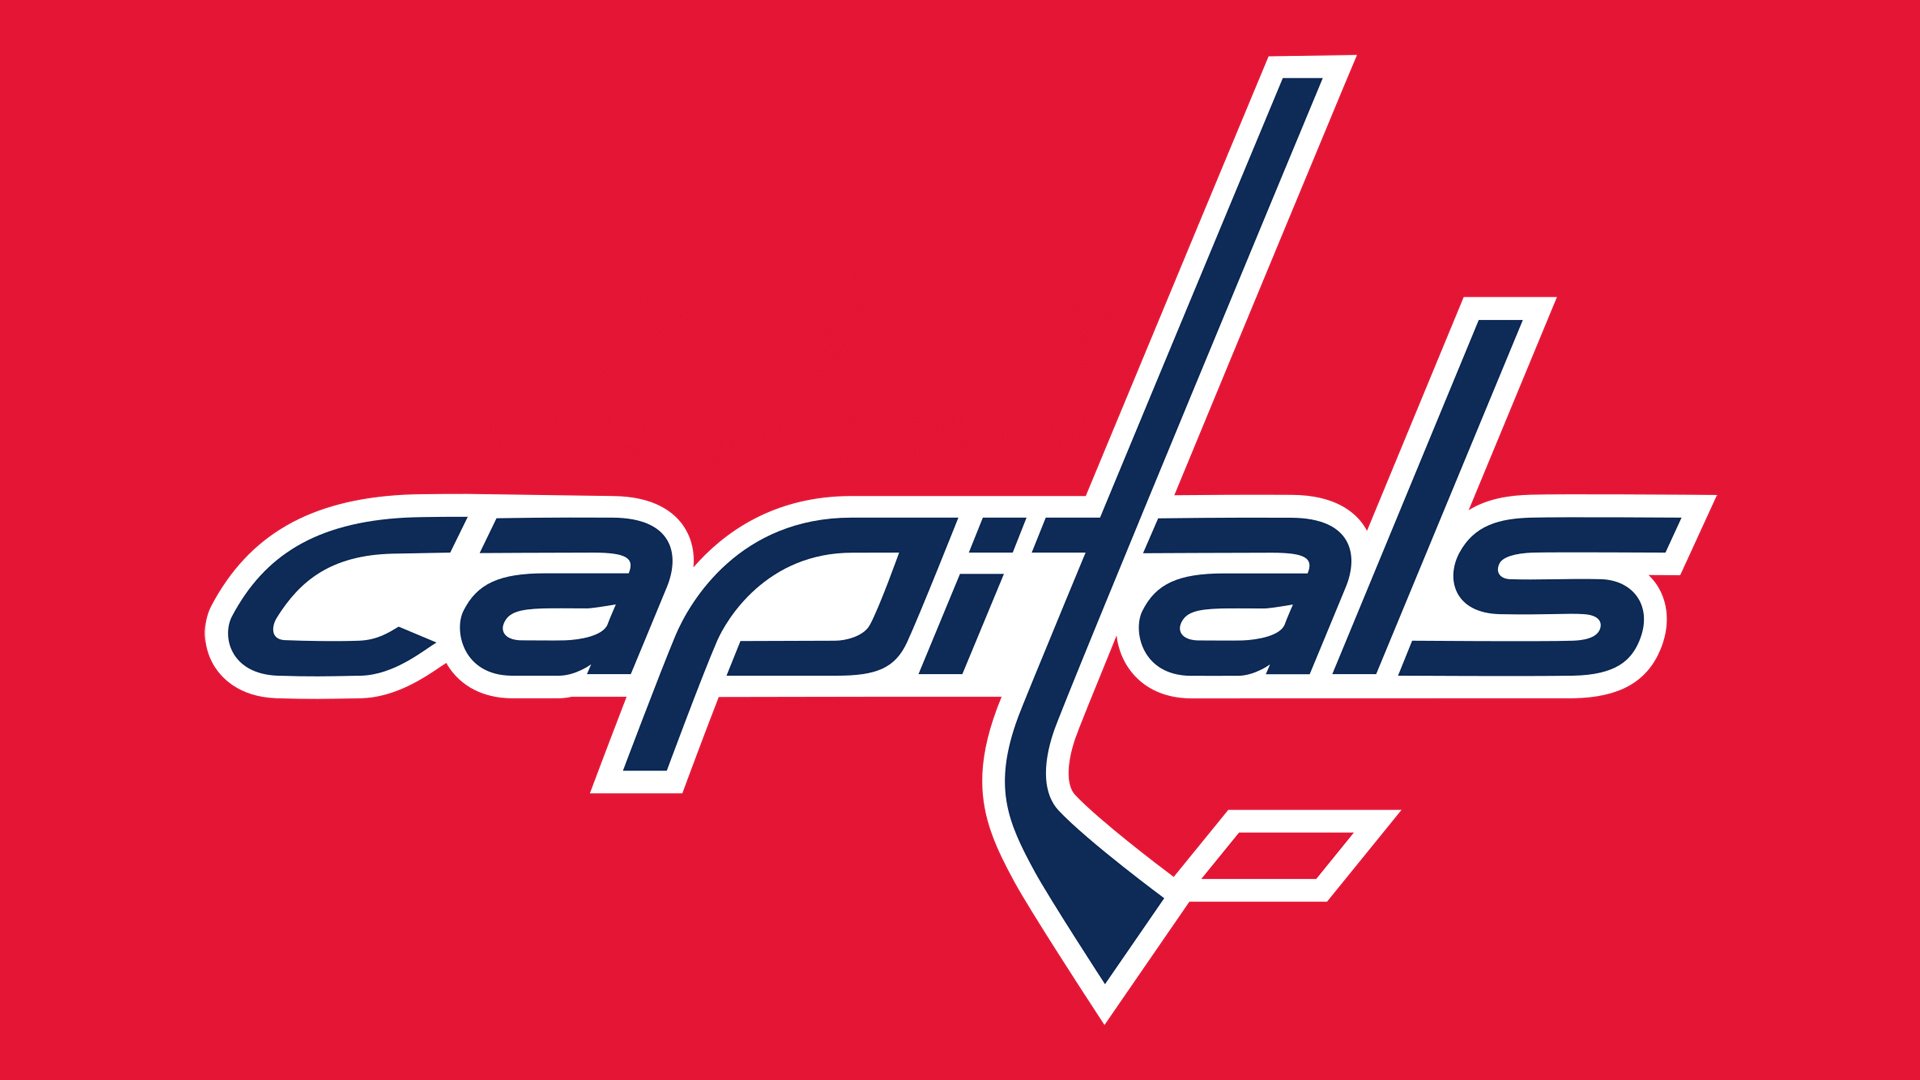 Blue and red eagle logo, Washington Capitals National Hockey